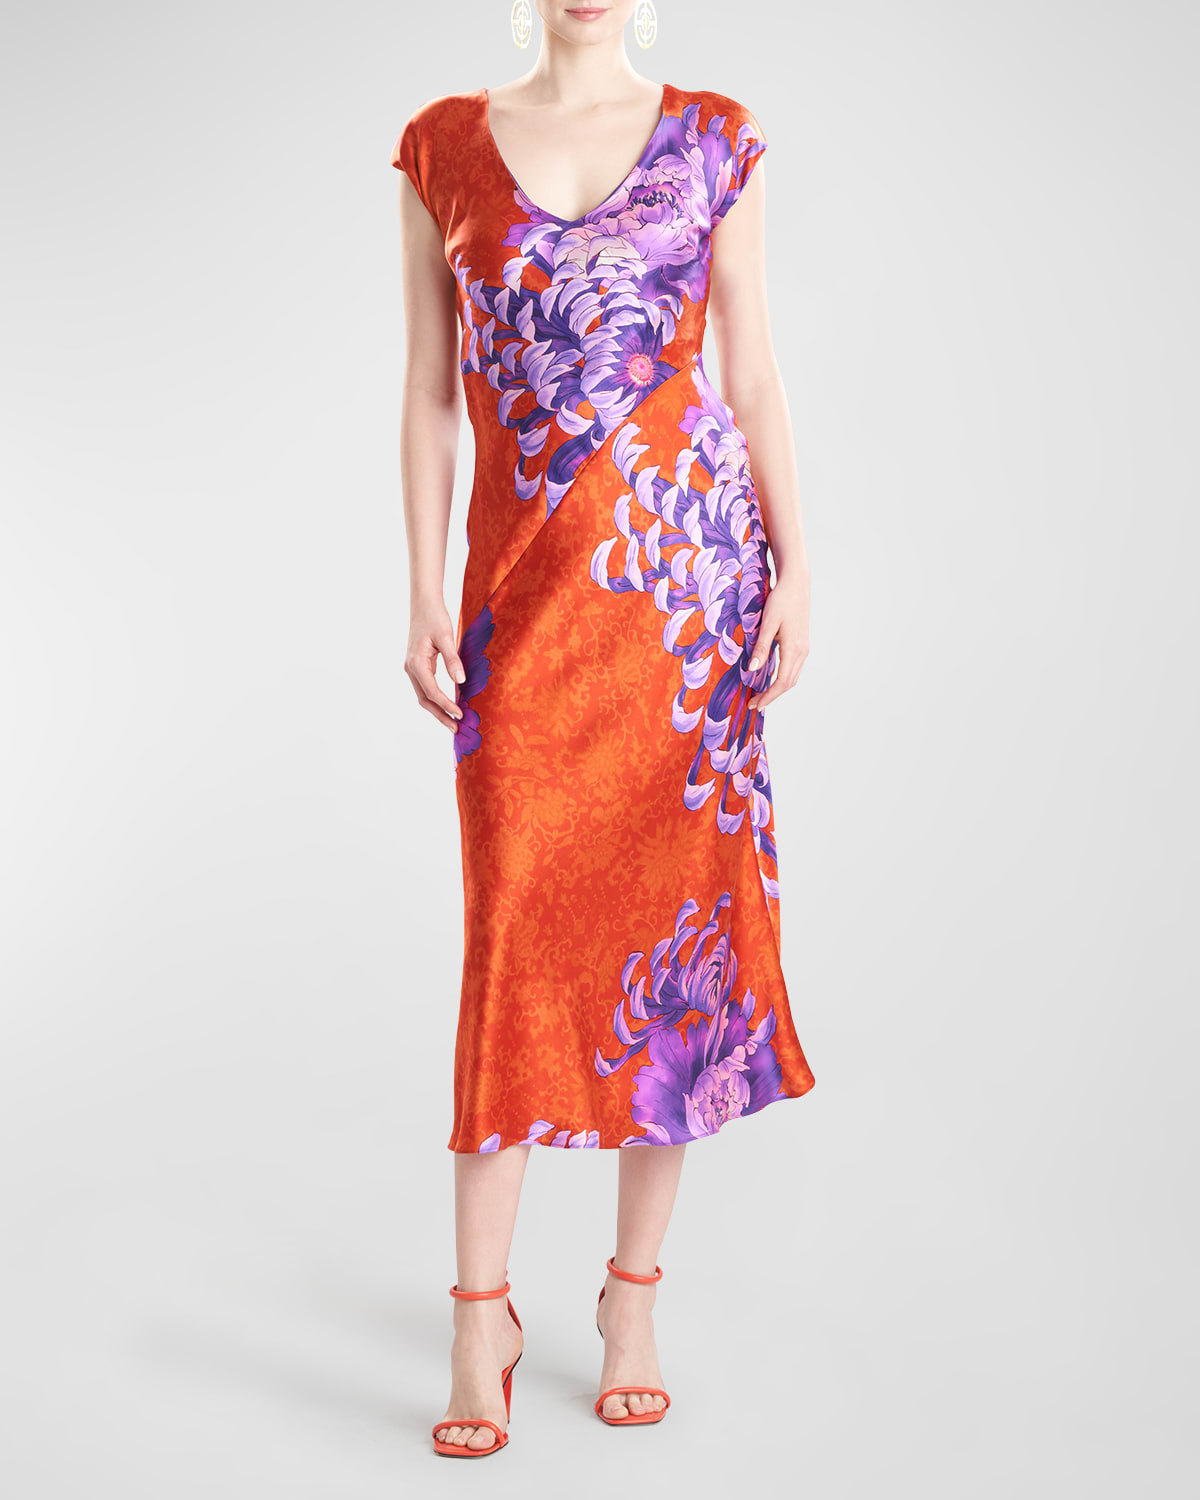 Josie Natori Sumida Floral-Print Cap-Sleeve Slip Dress